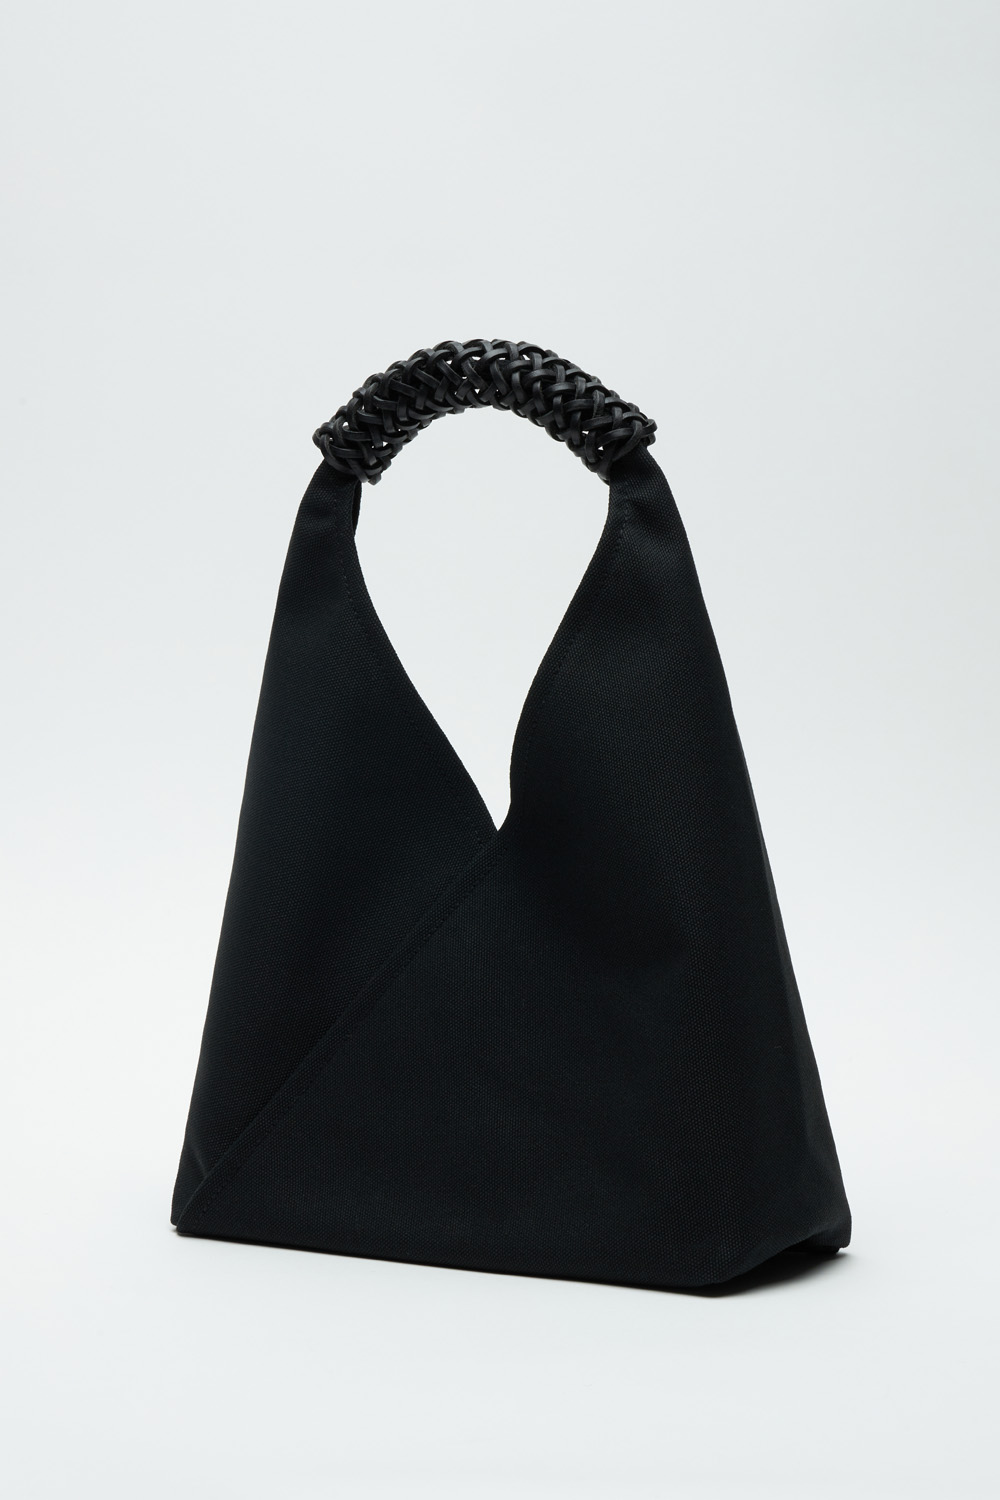 Woven Triangle Bag 36_Black